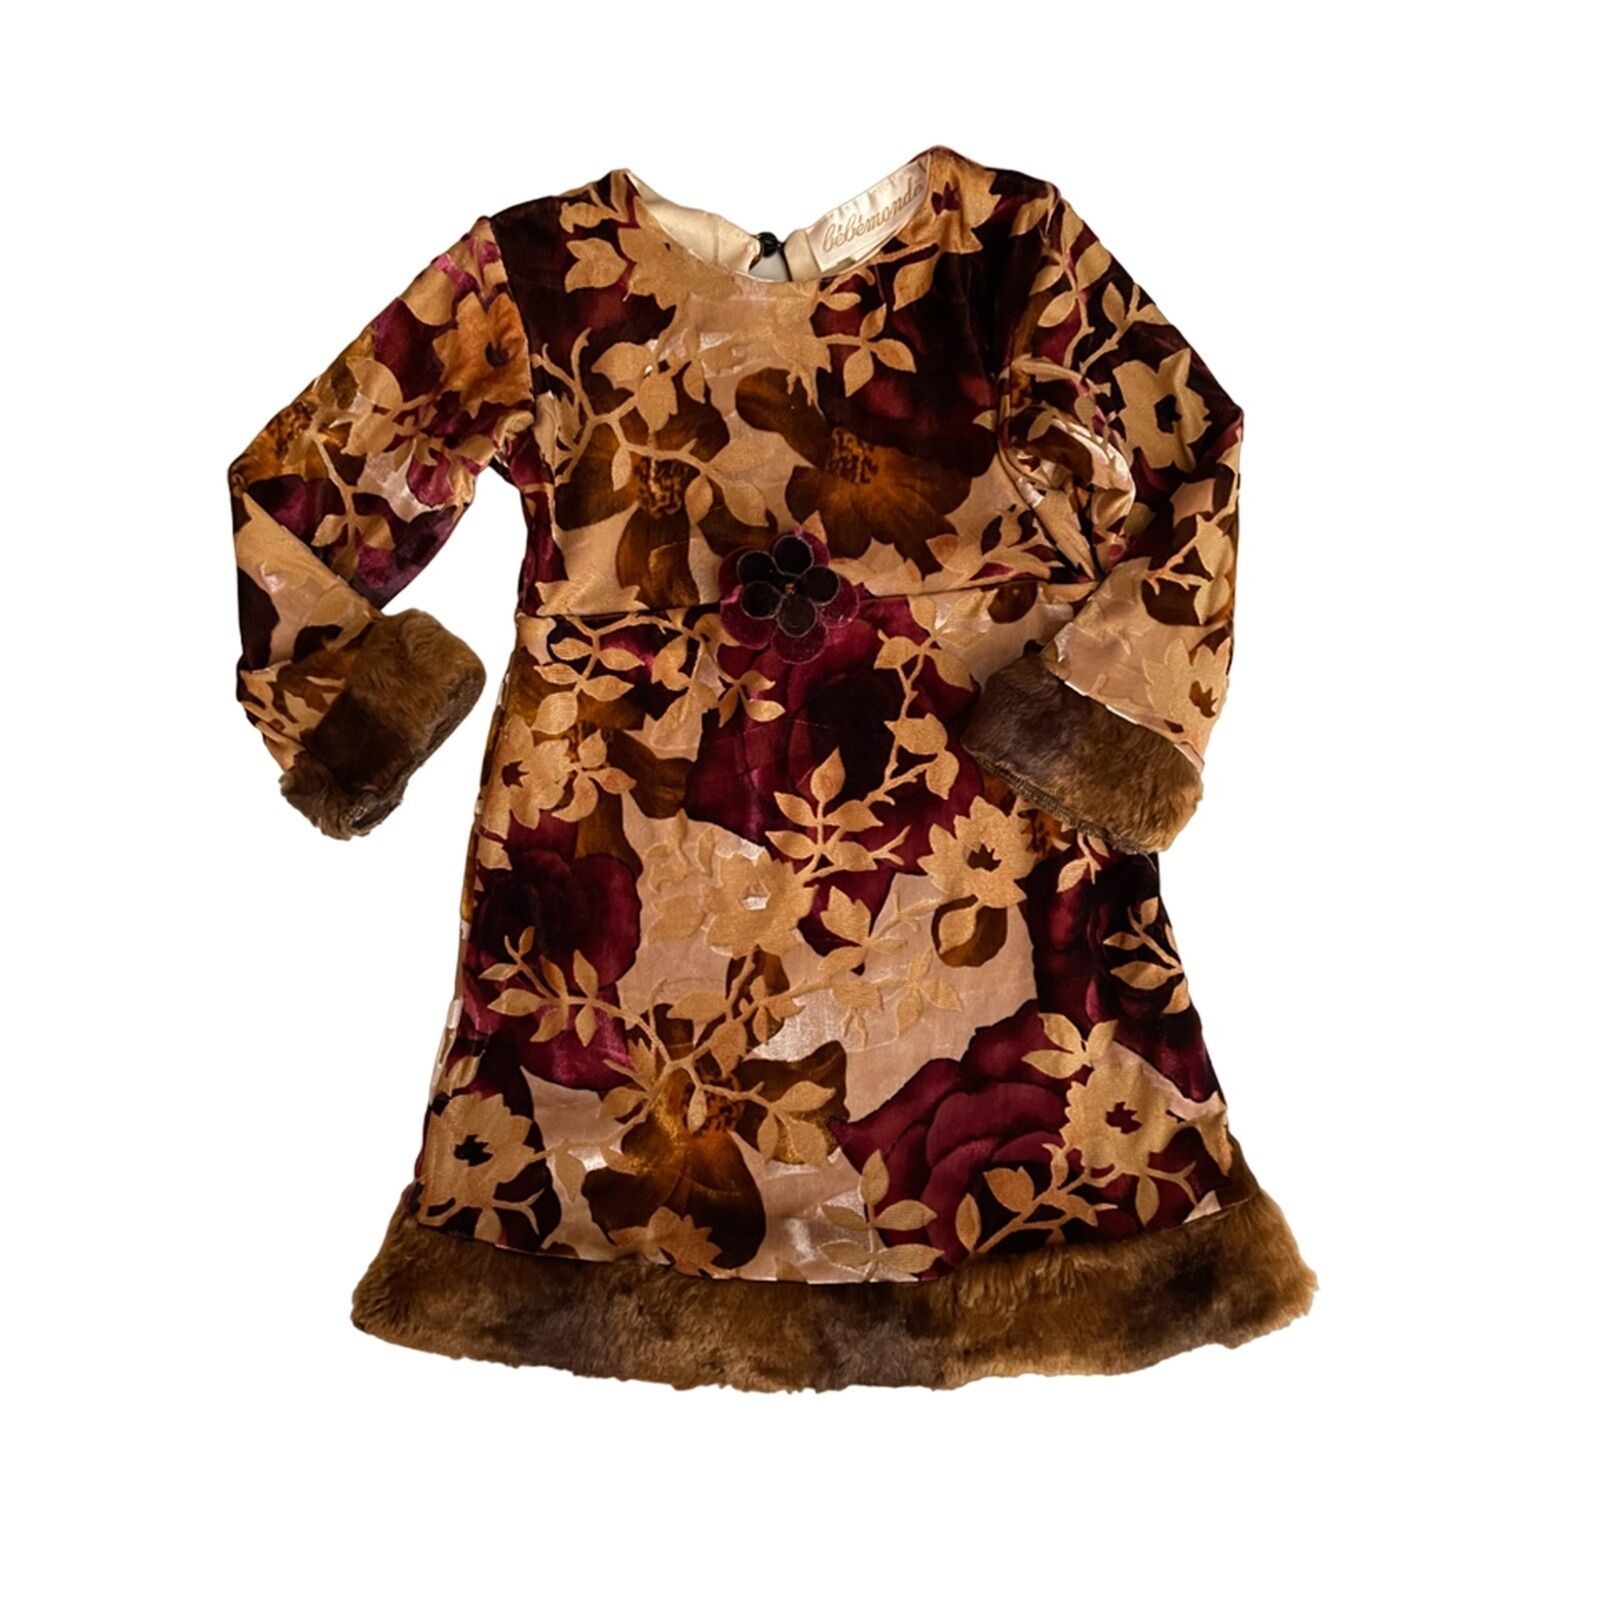 Primary image for Bebe Monde Velvet Floral Dress Size 2T